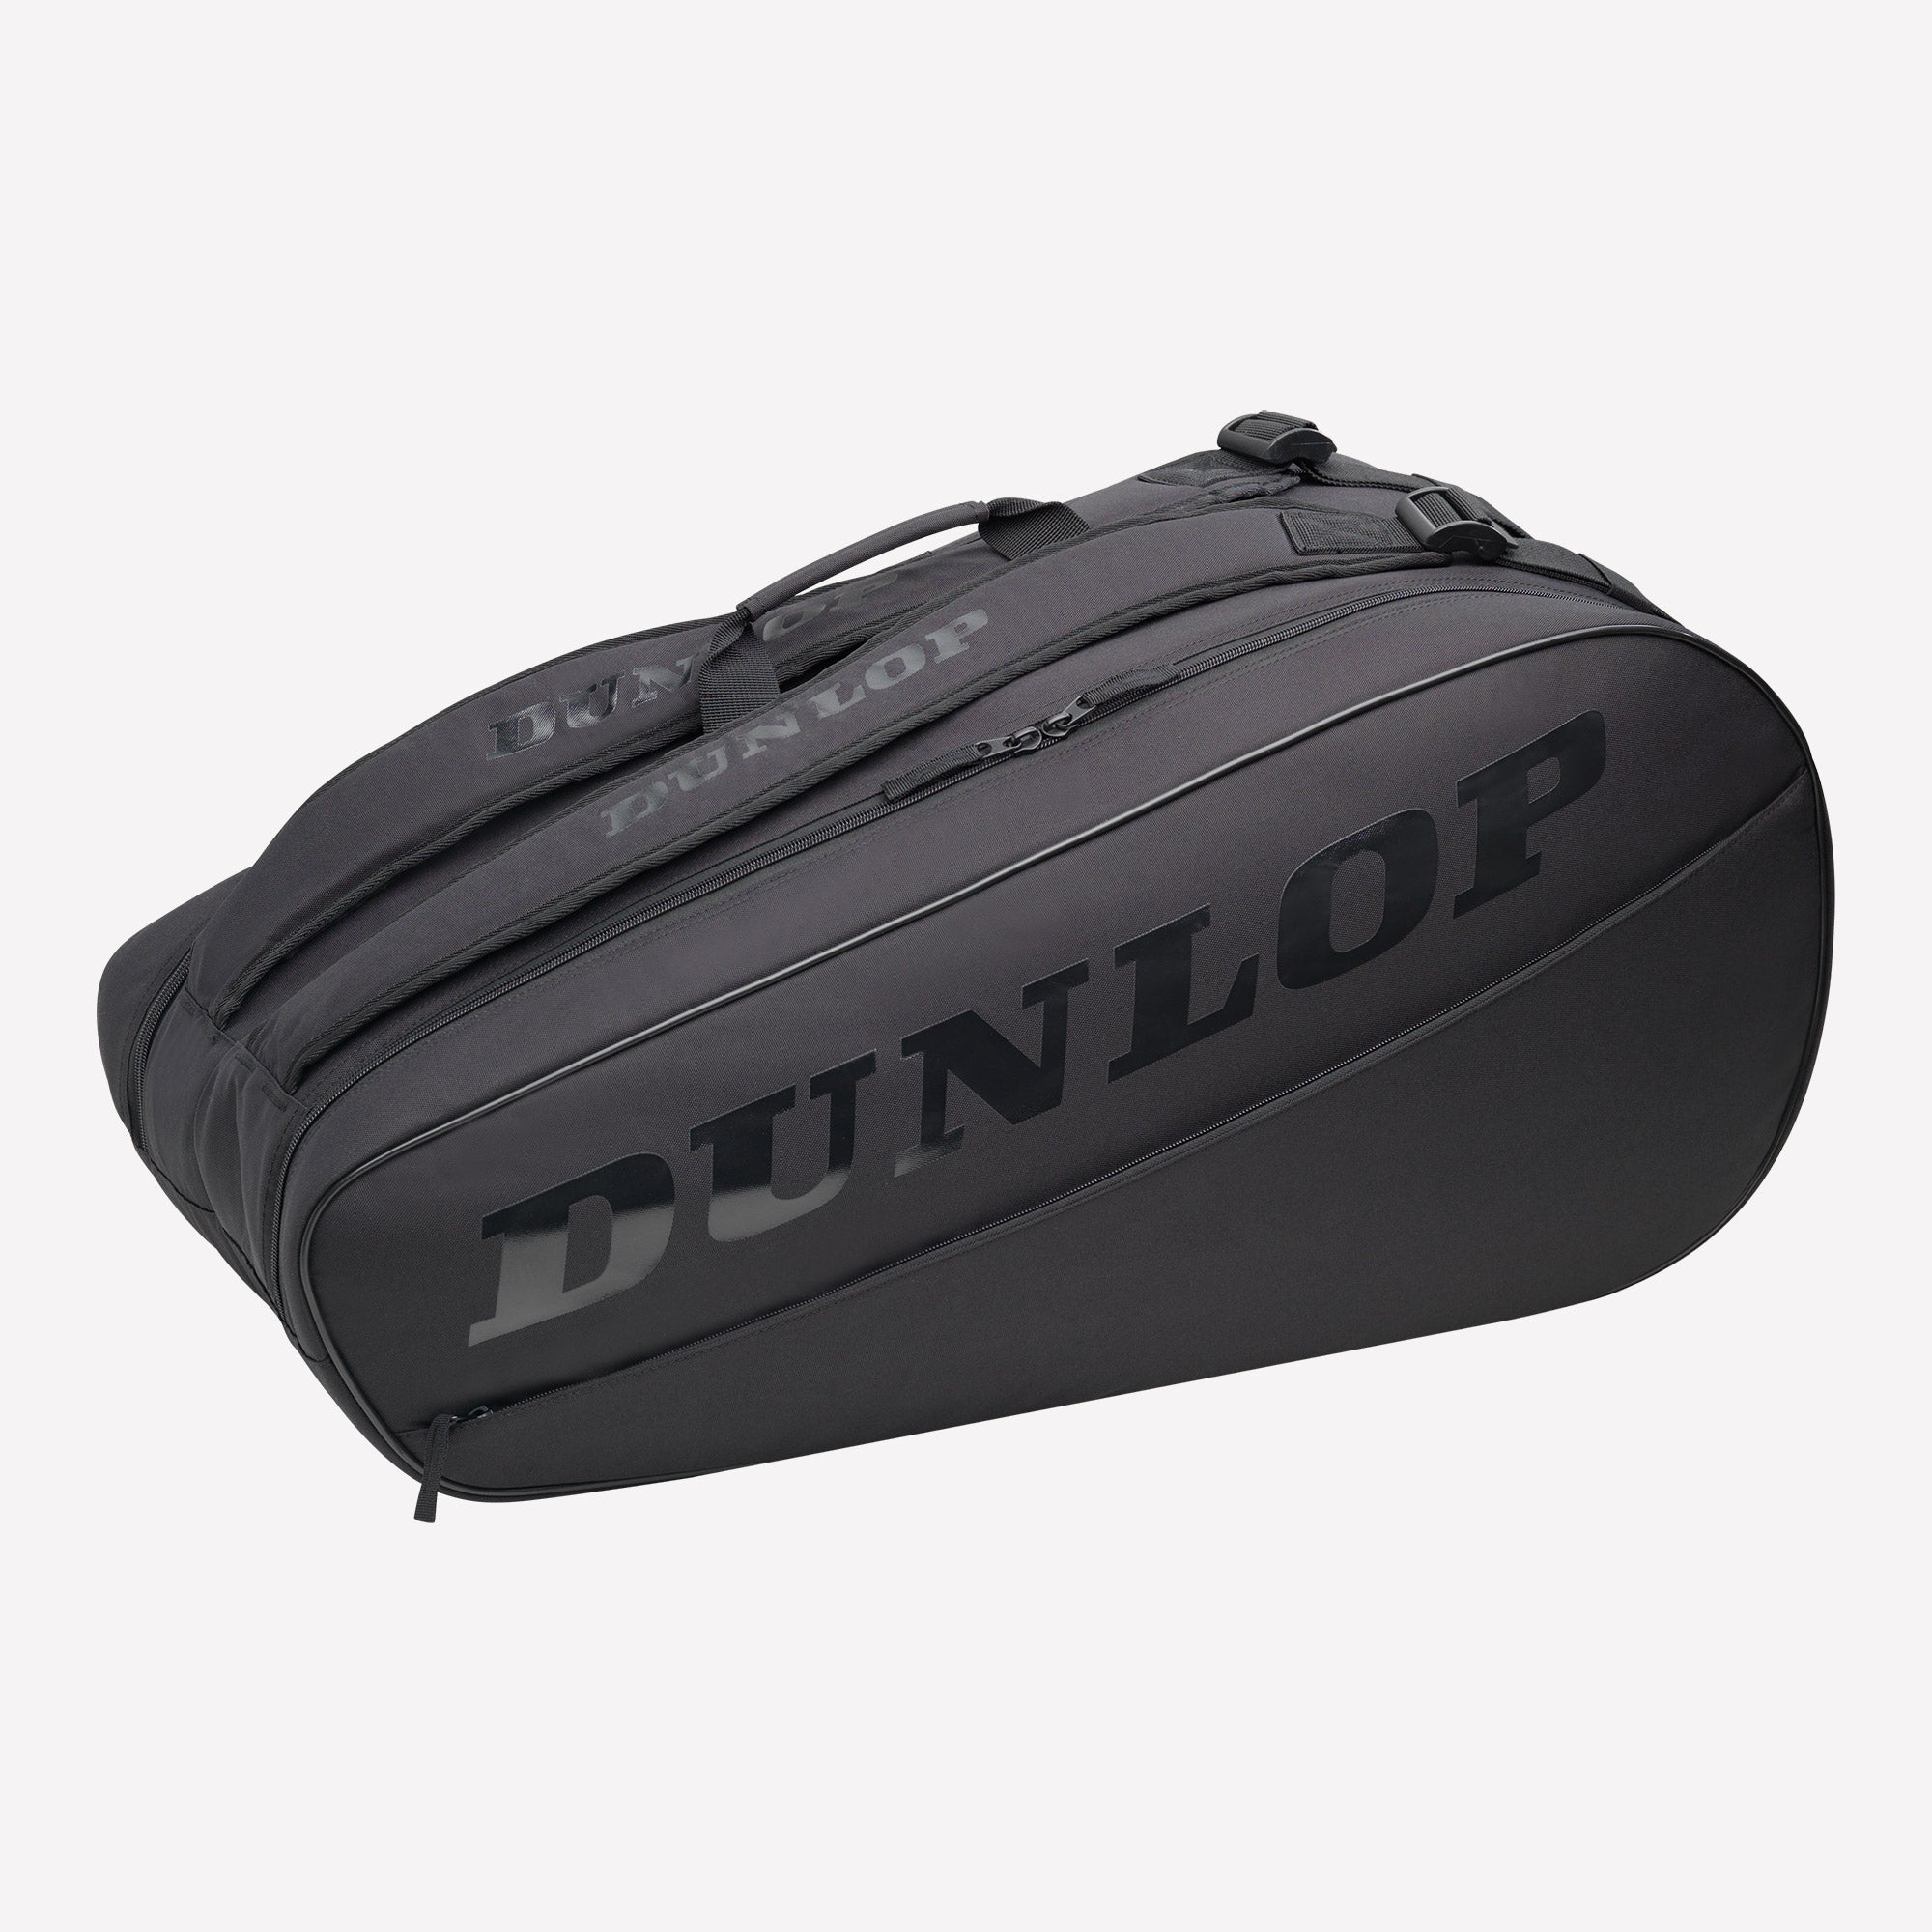 Dunlop CX Club 10R Tennis Bag Black (1)